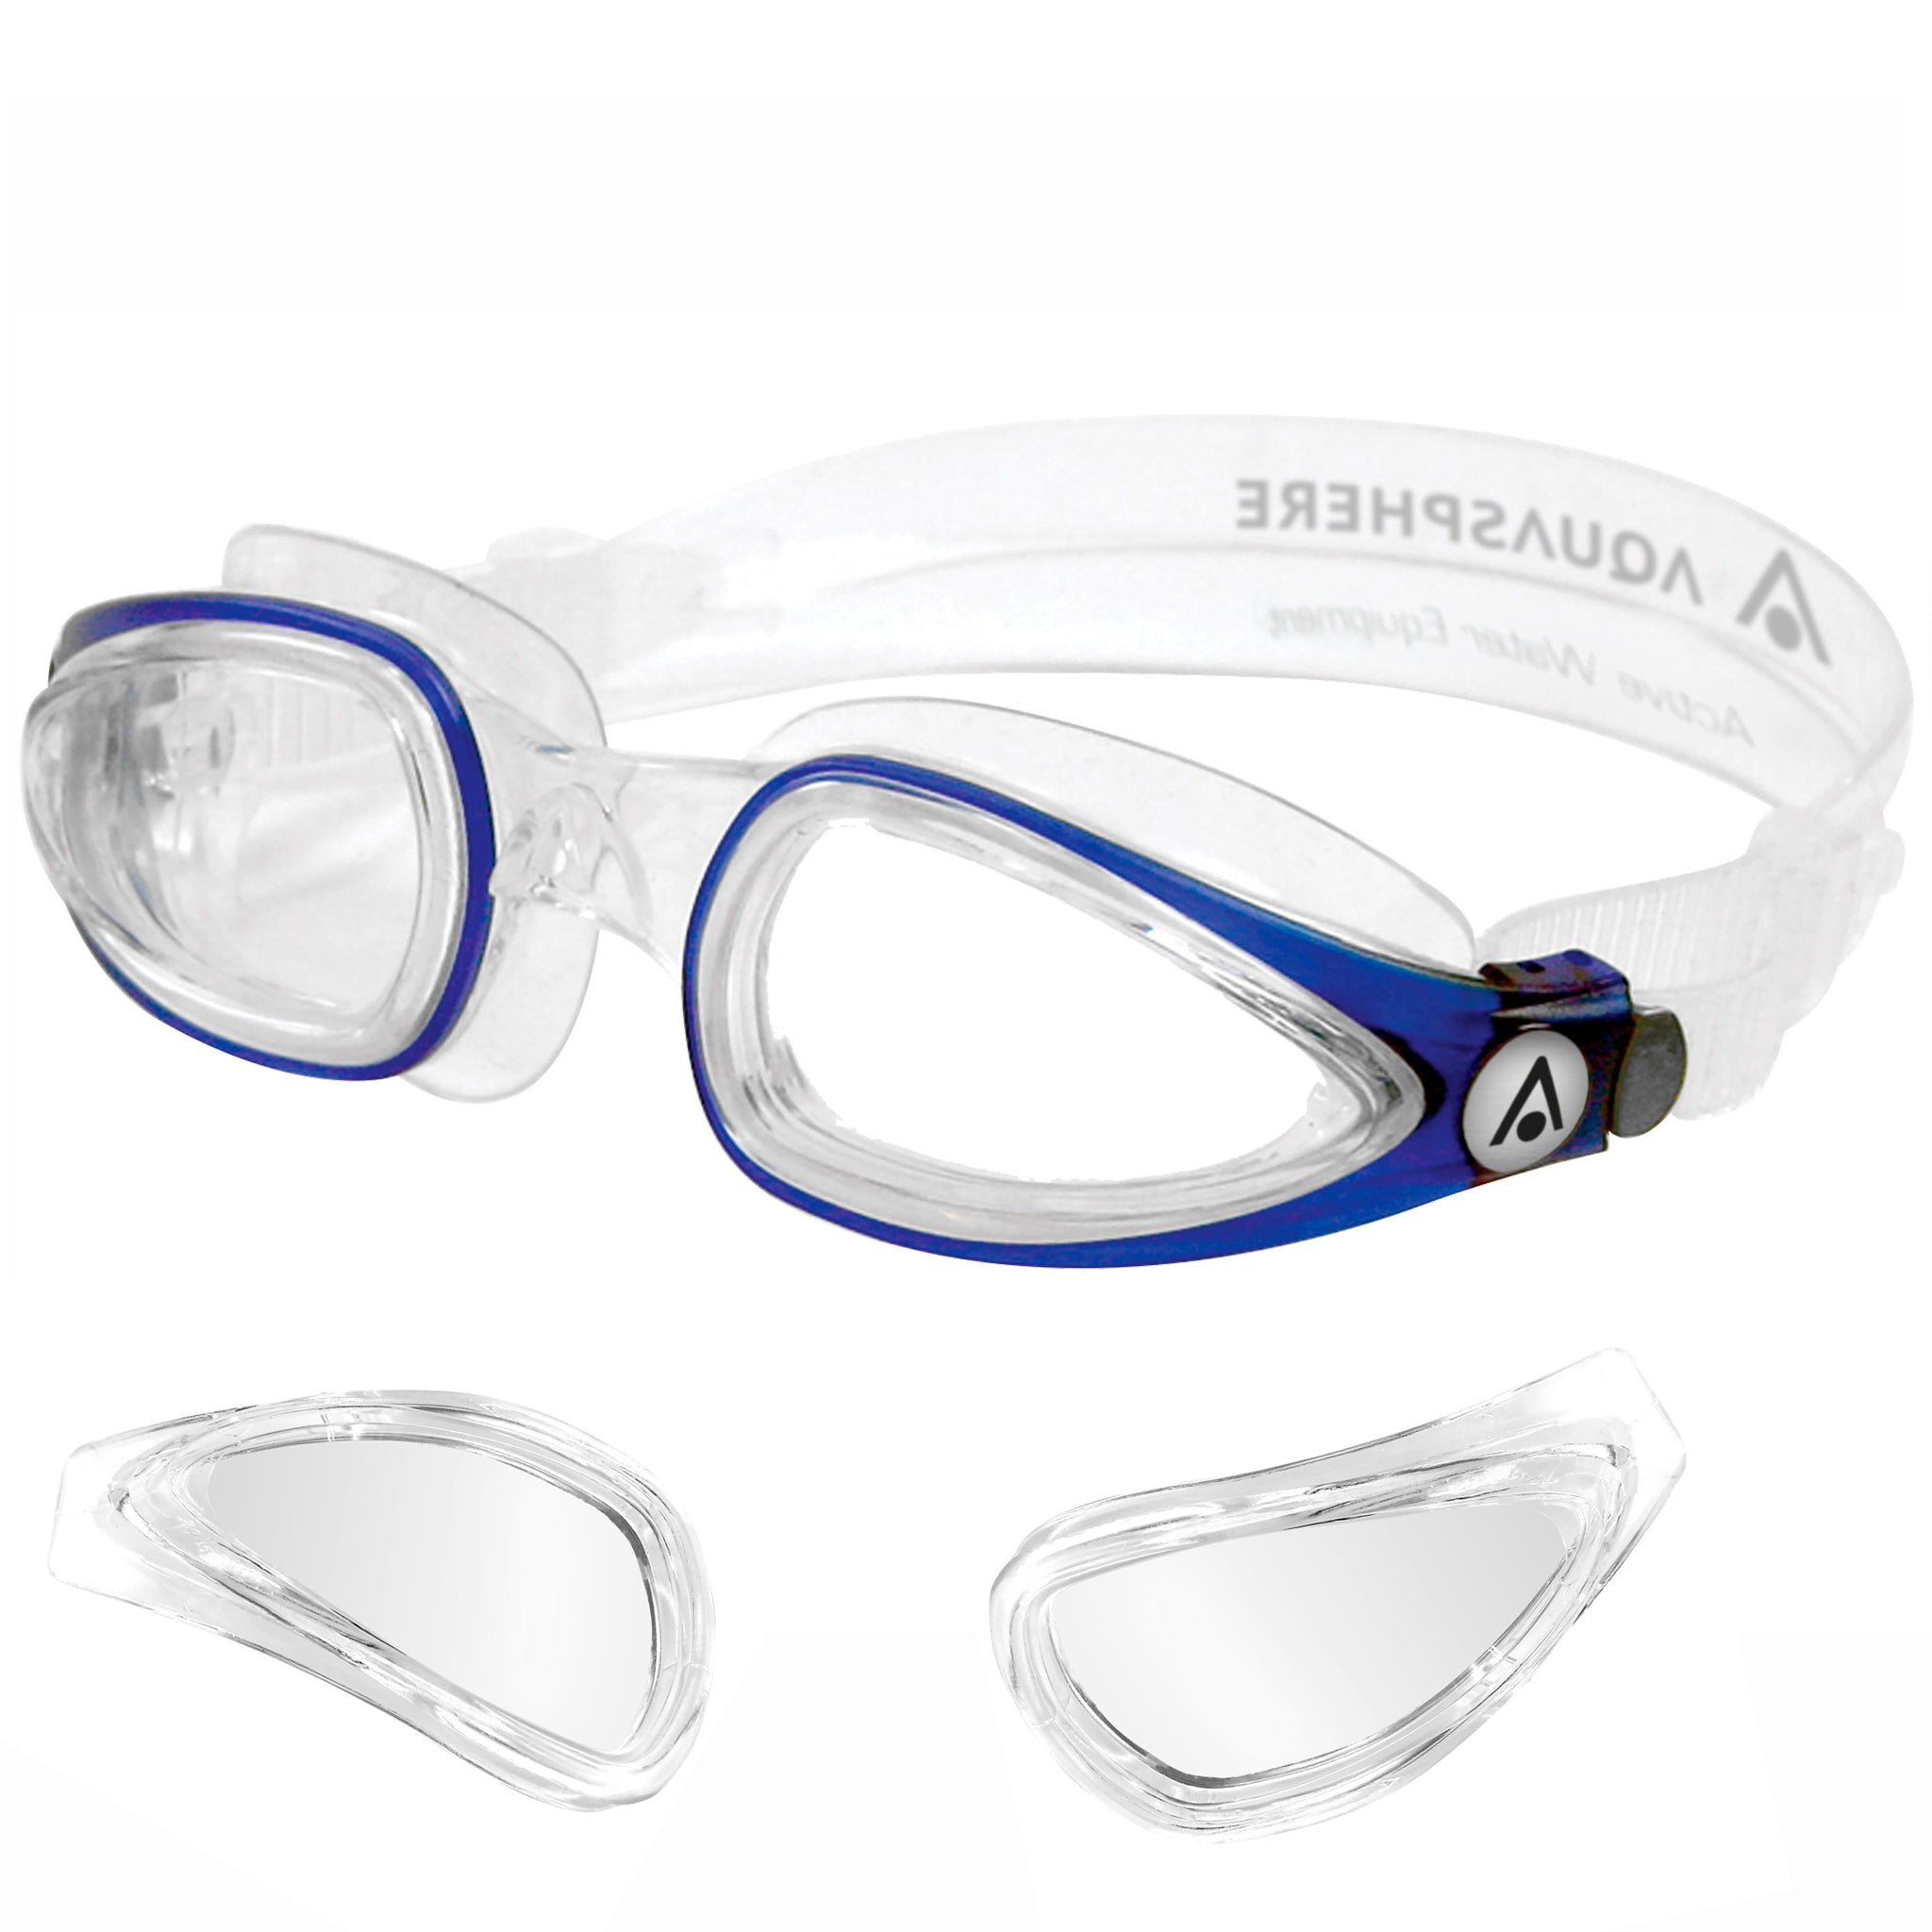 Aquasphere Eagle Goggles with Corrective Vision Lenses